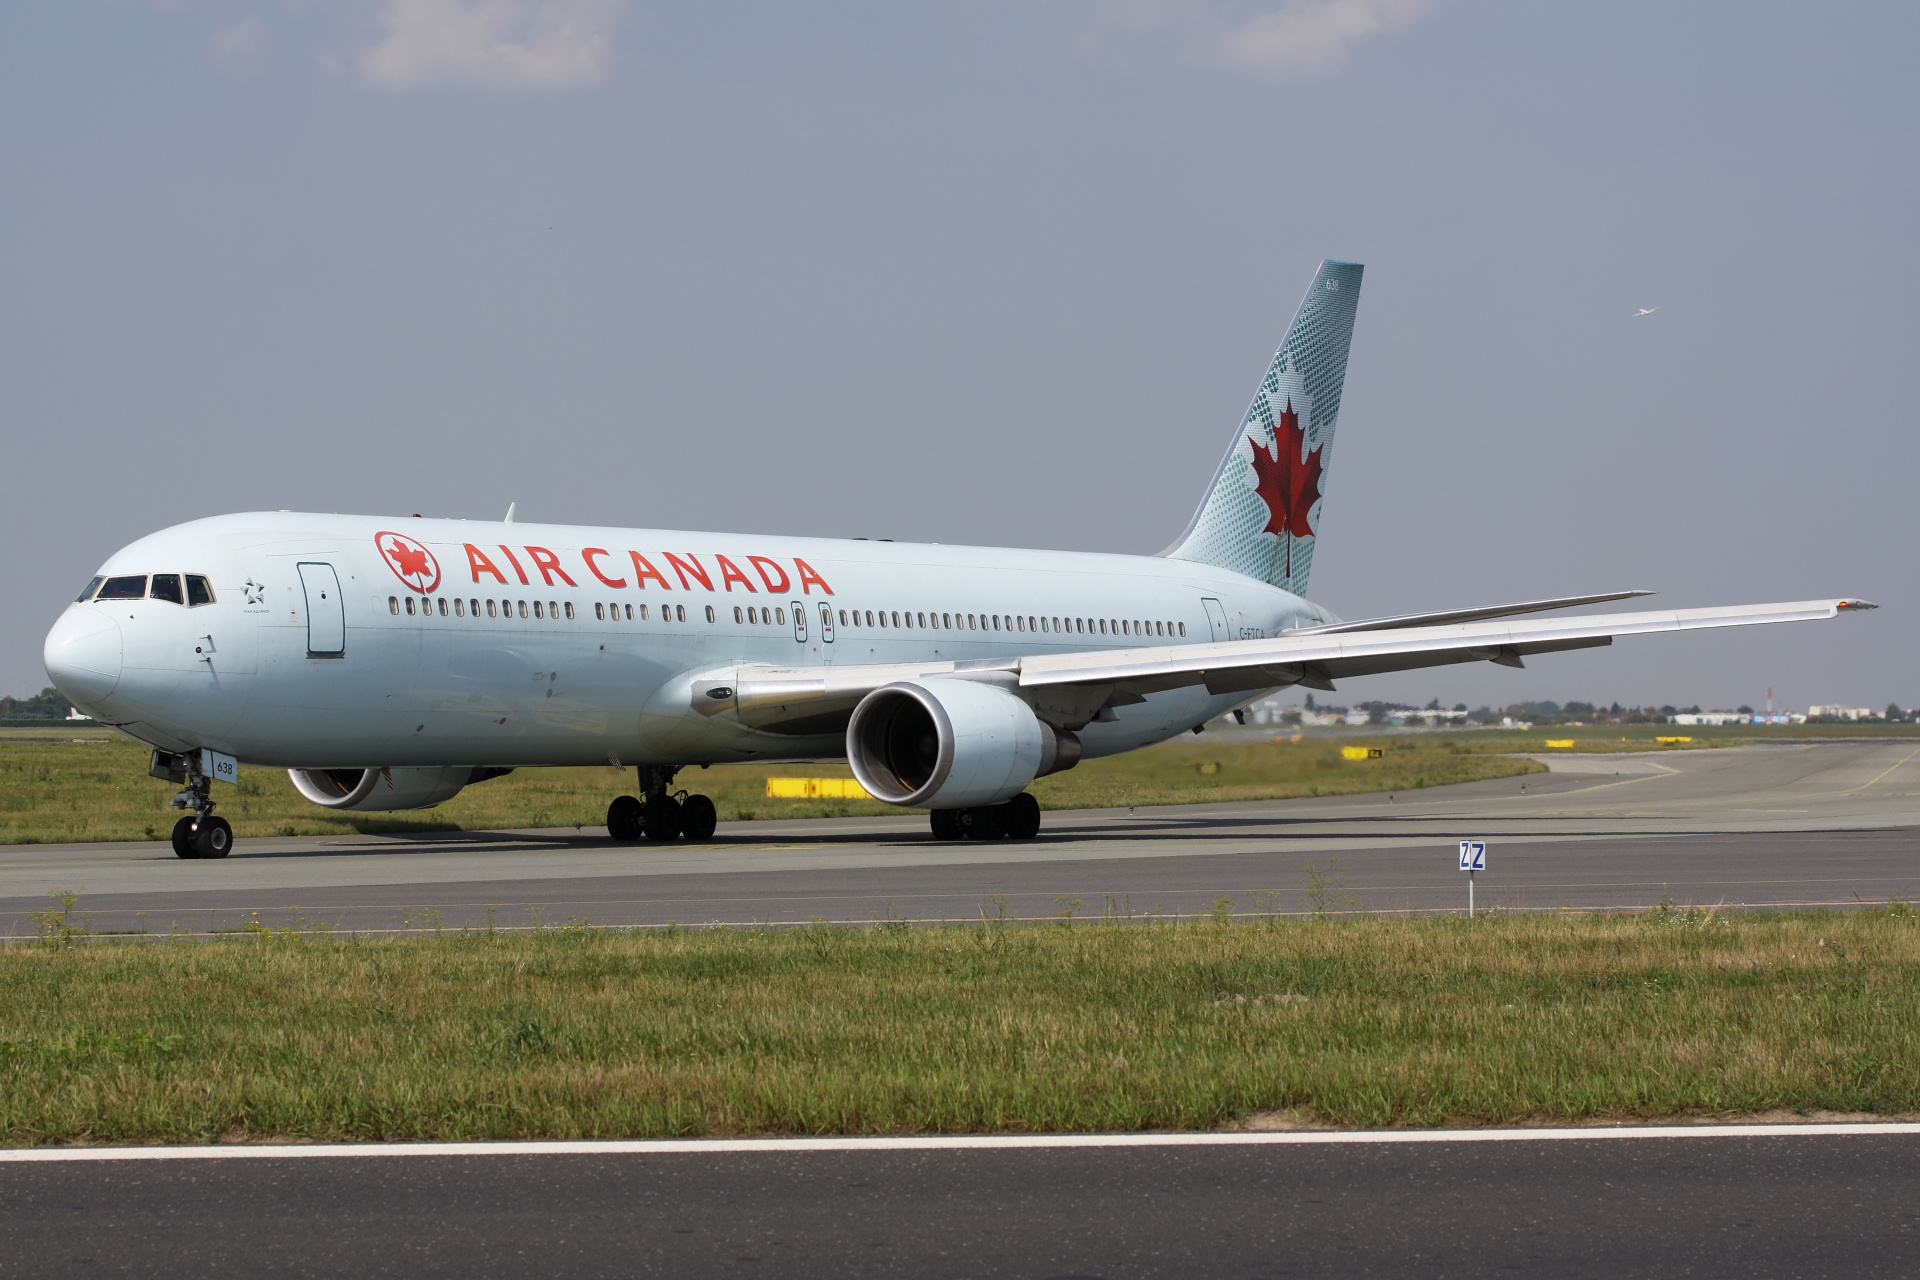 C-FTCA (Aircraft » EPWA Spotting » Boeing 767-300 » Air Canada)